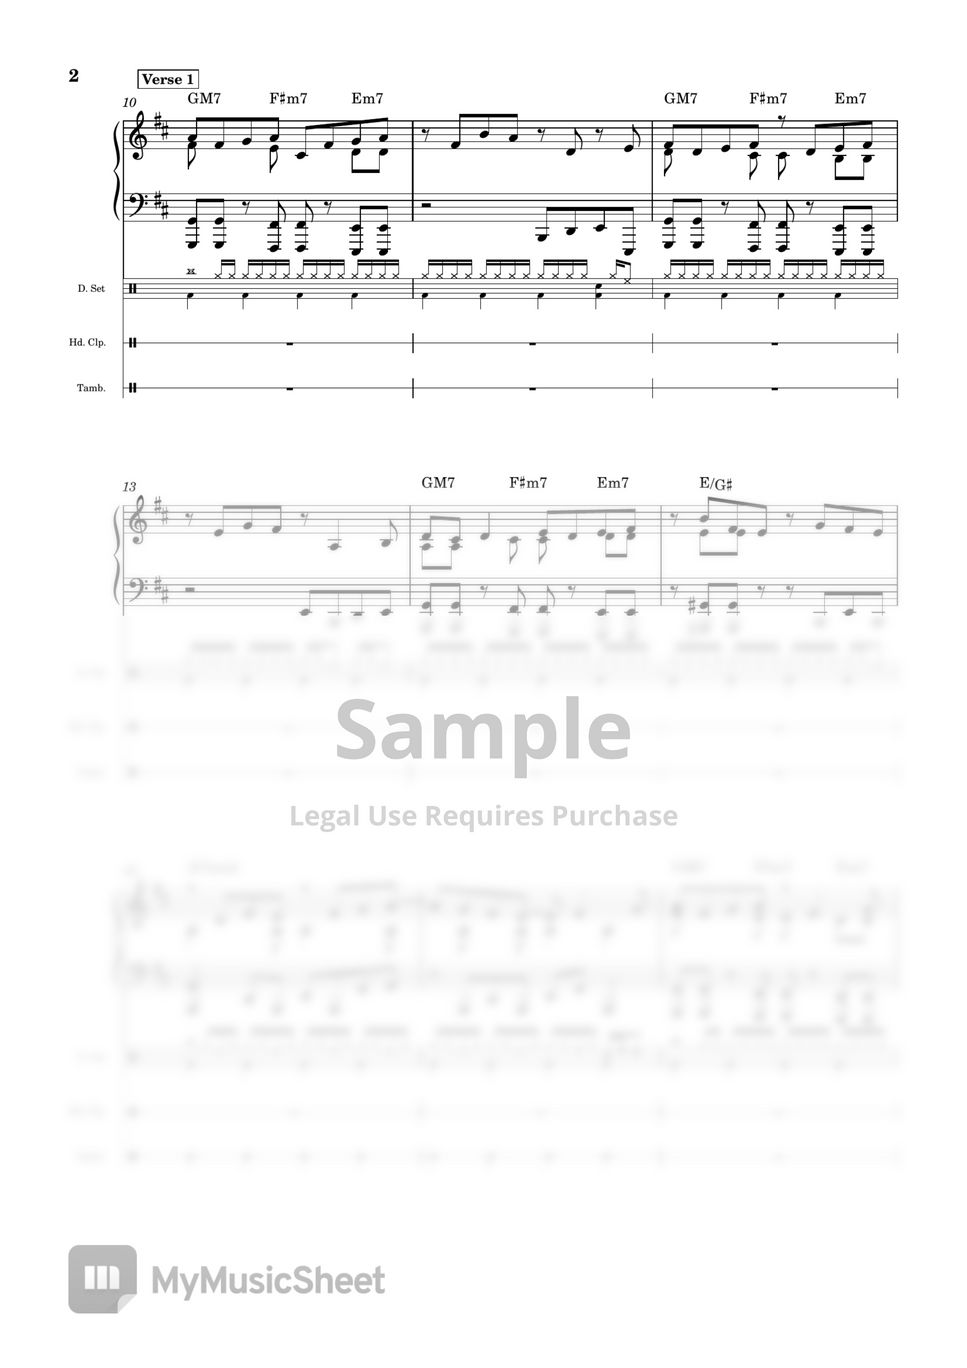 BUMP OF CHICKEN - SOUVENIR (Piano + Drums Sheet Music with MIDI & MSCZ) by Roju-senpai